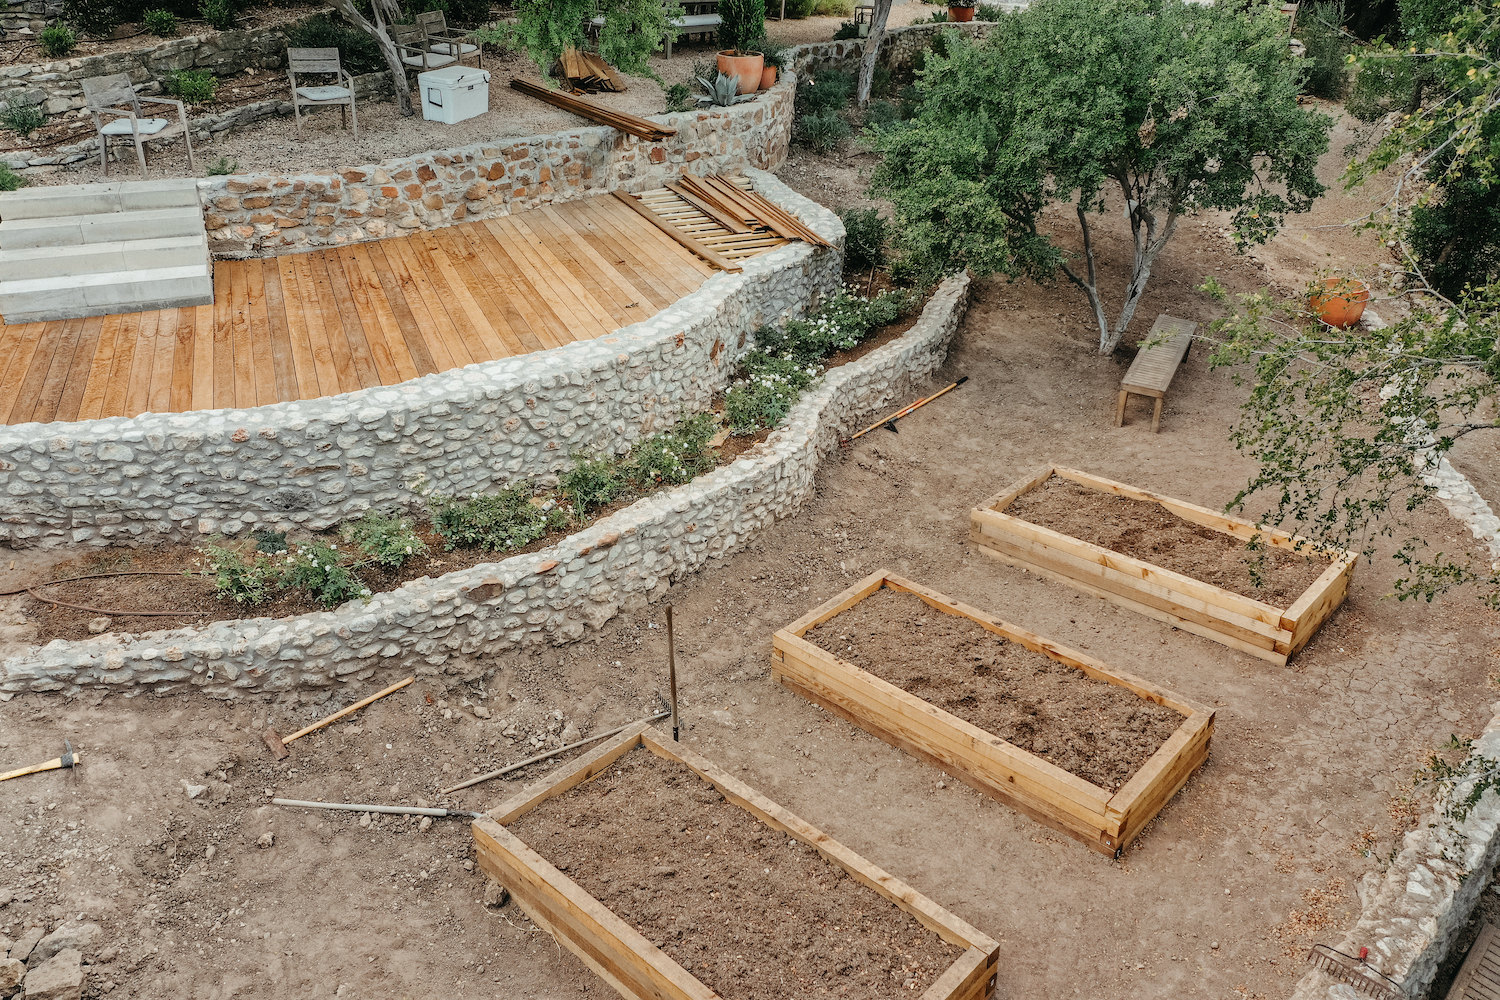 camille styles backyard - DIY raised vegetable garden beds - process